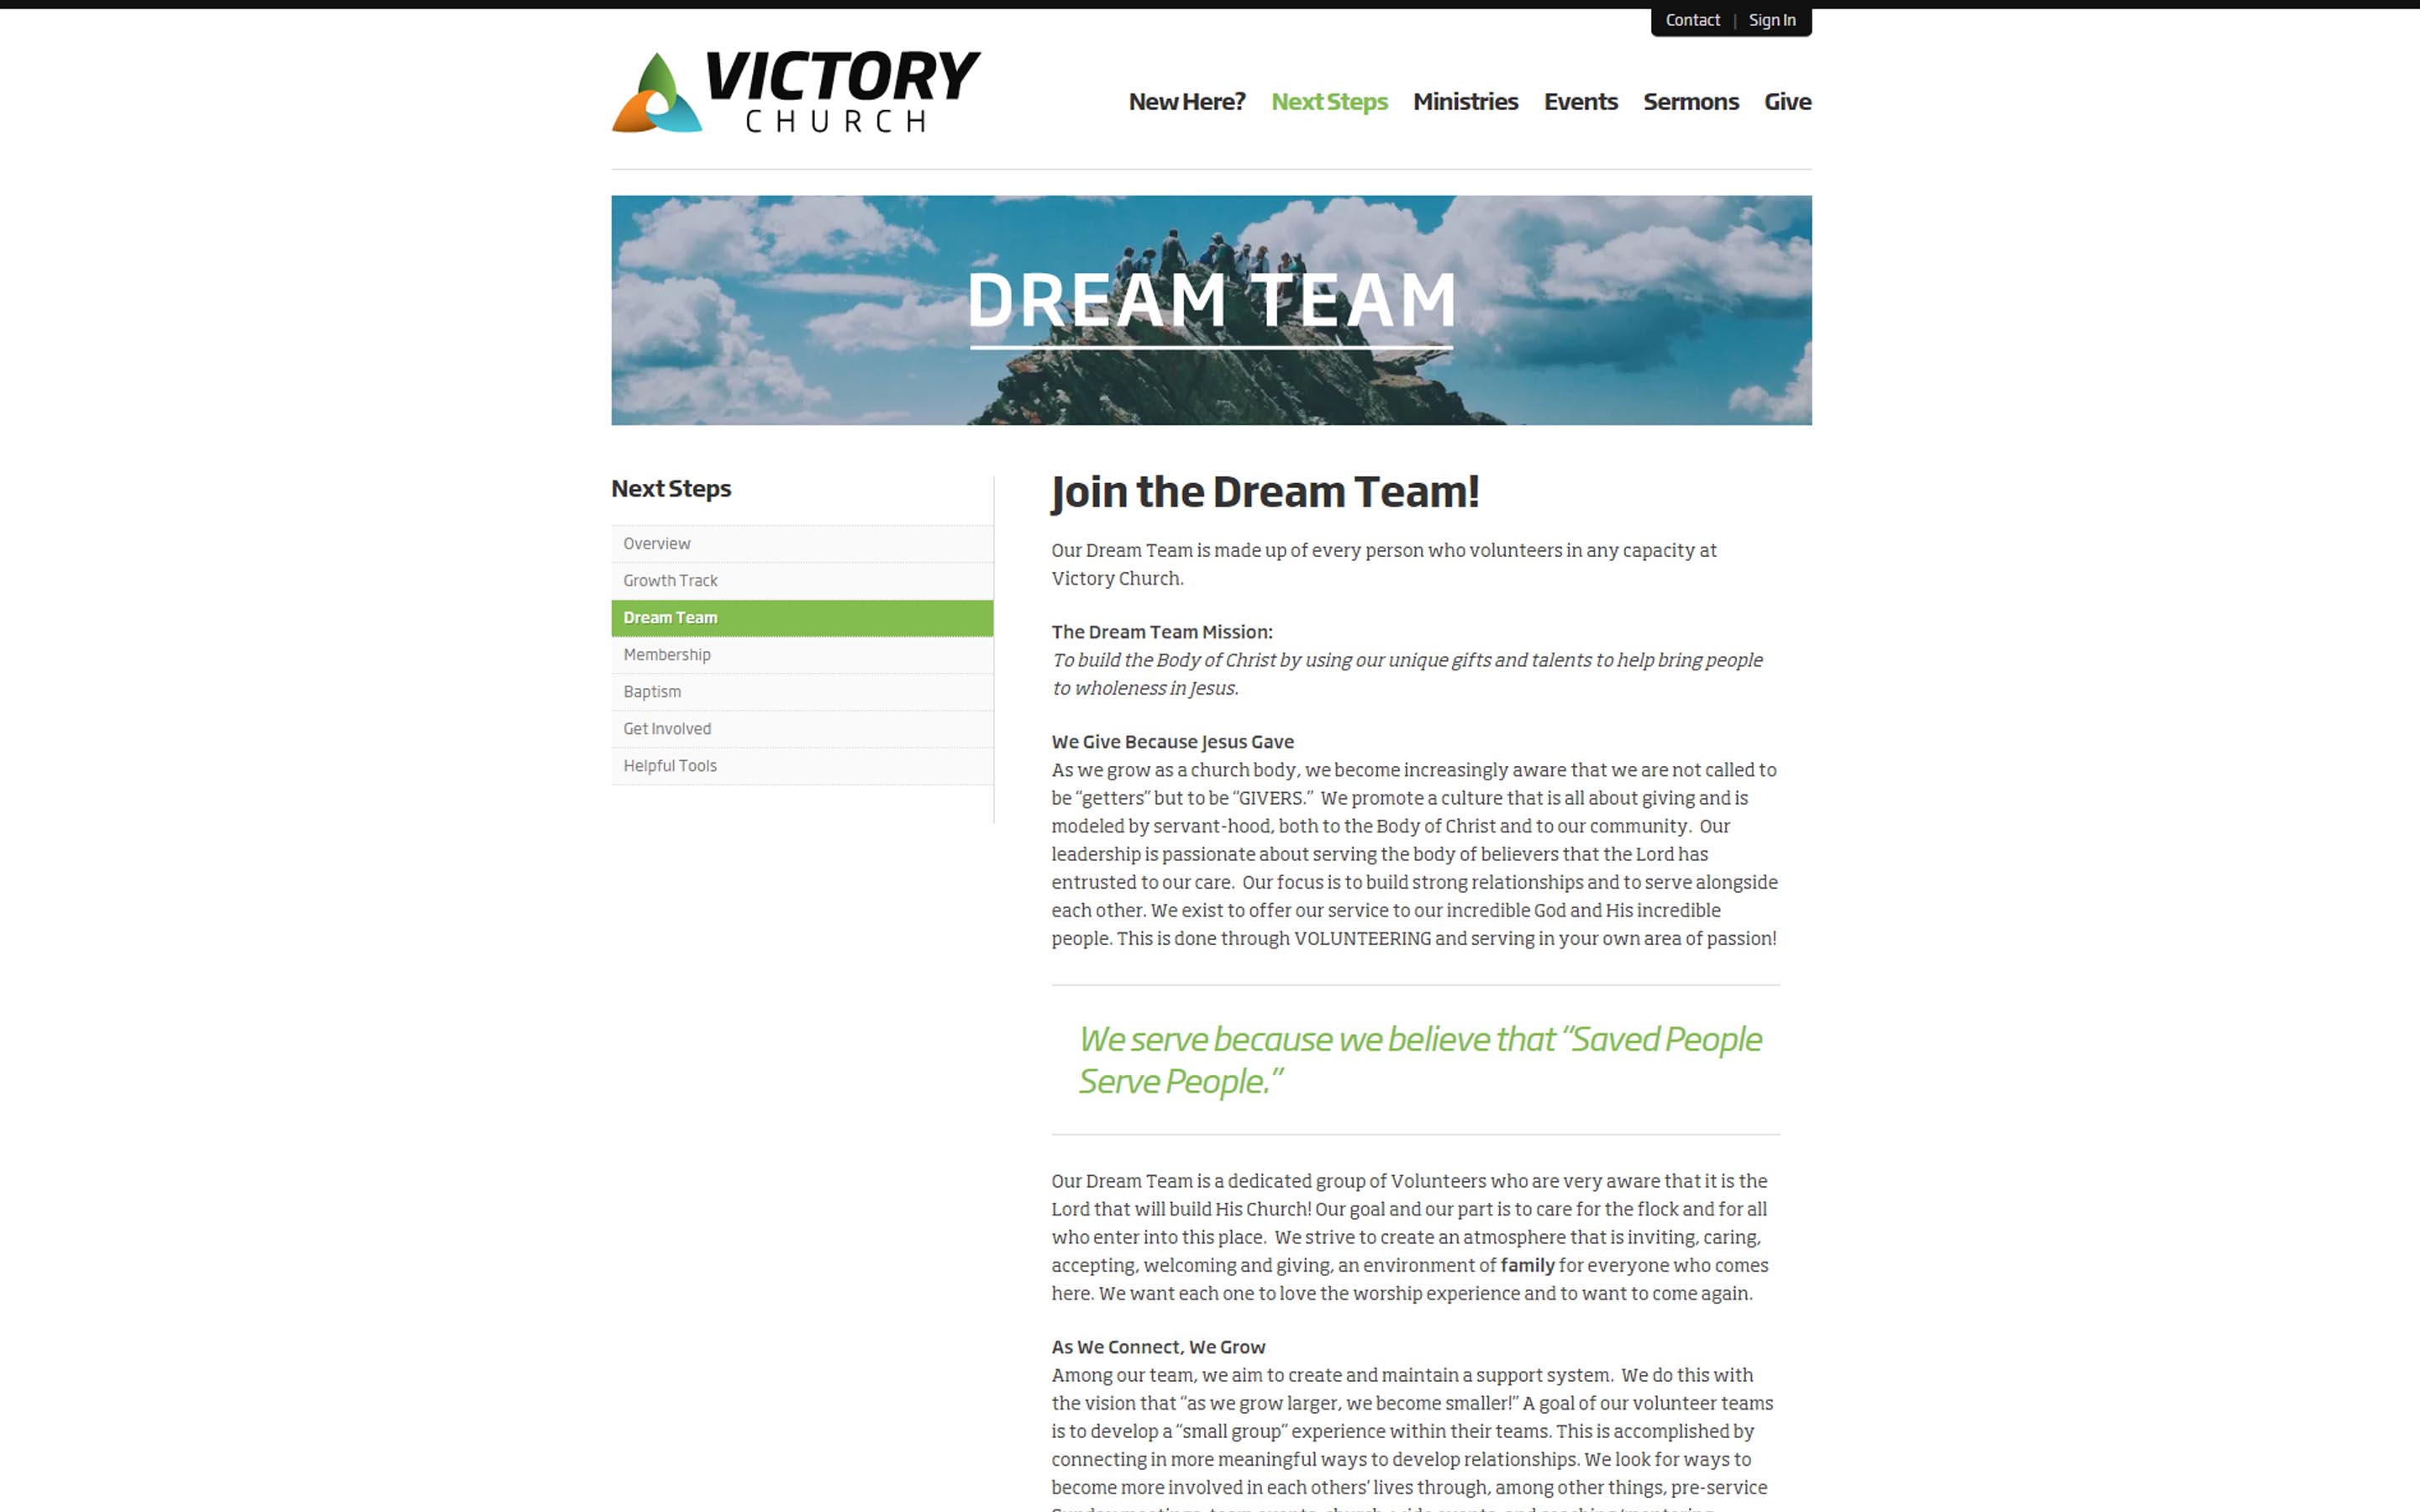 TomLowe_Timescapes_ScreenCaps__0009_www.victorychurch.nu_nextsteps_dream-team